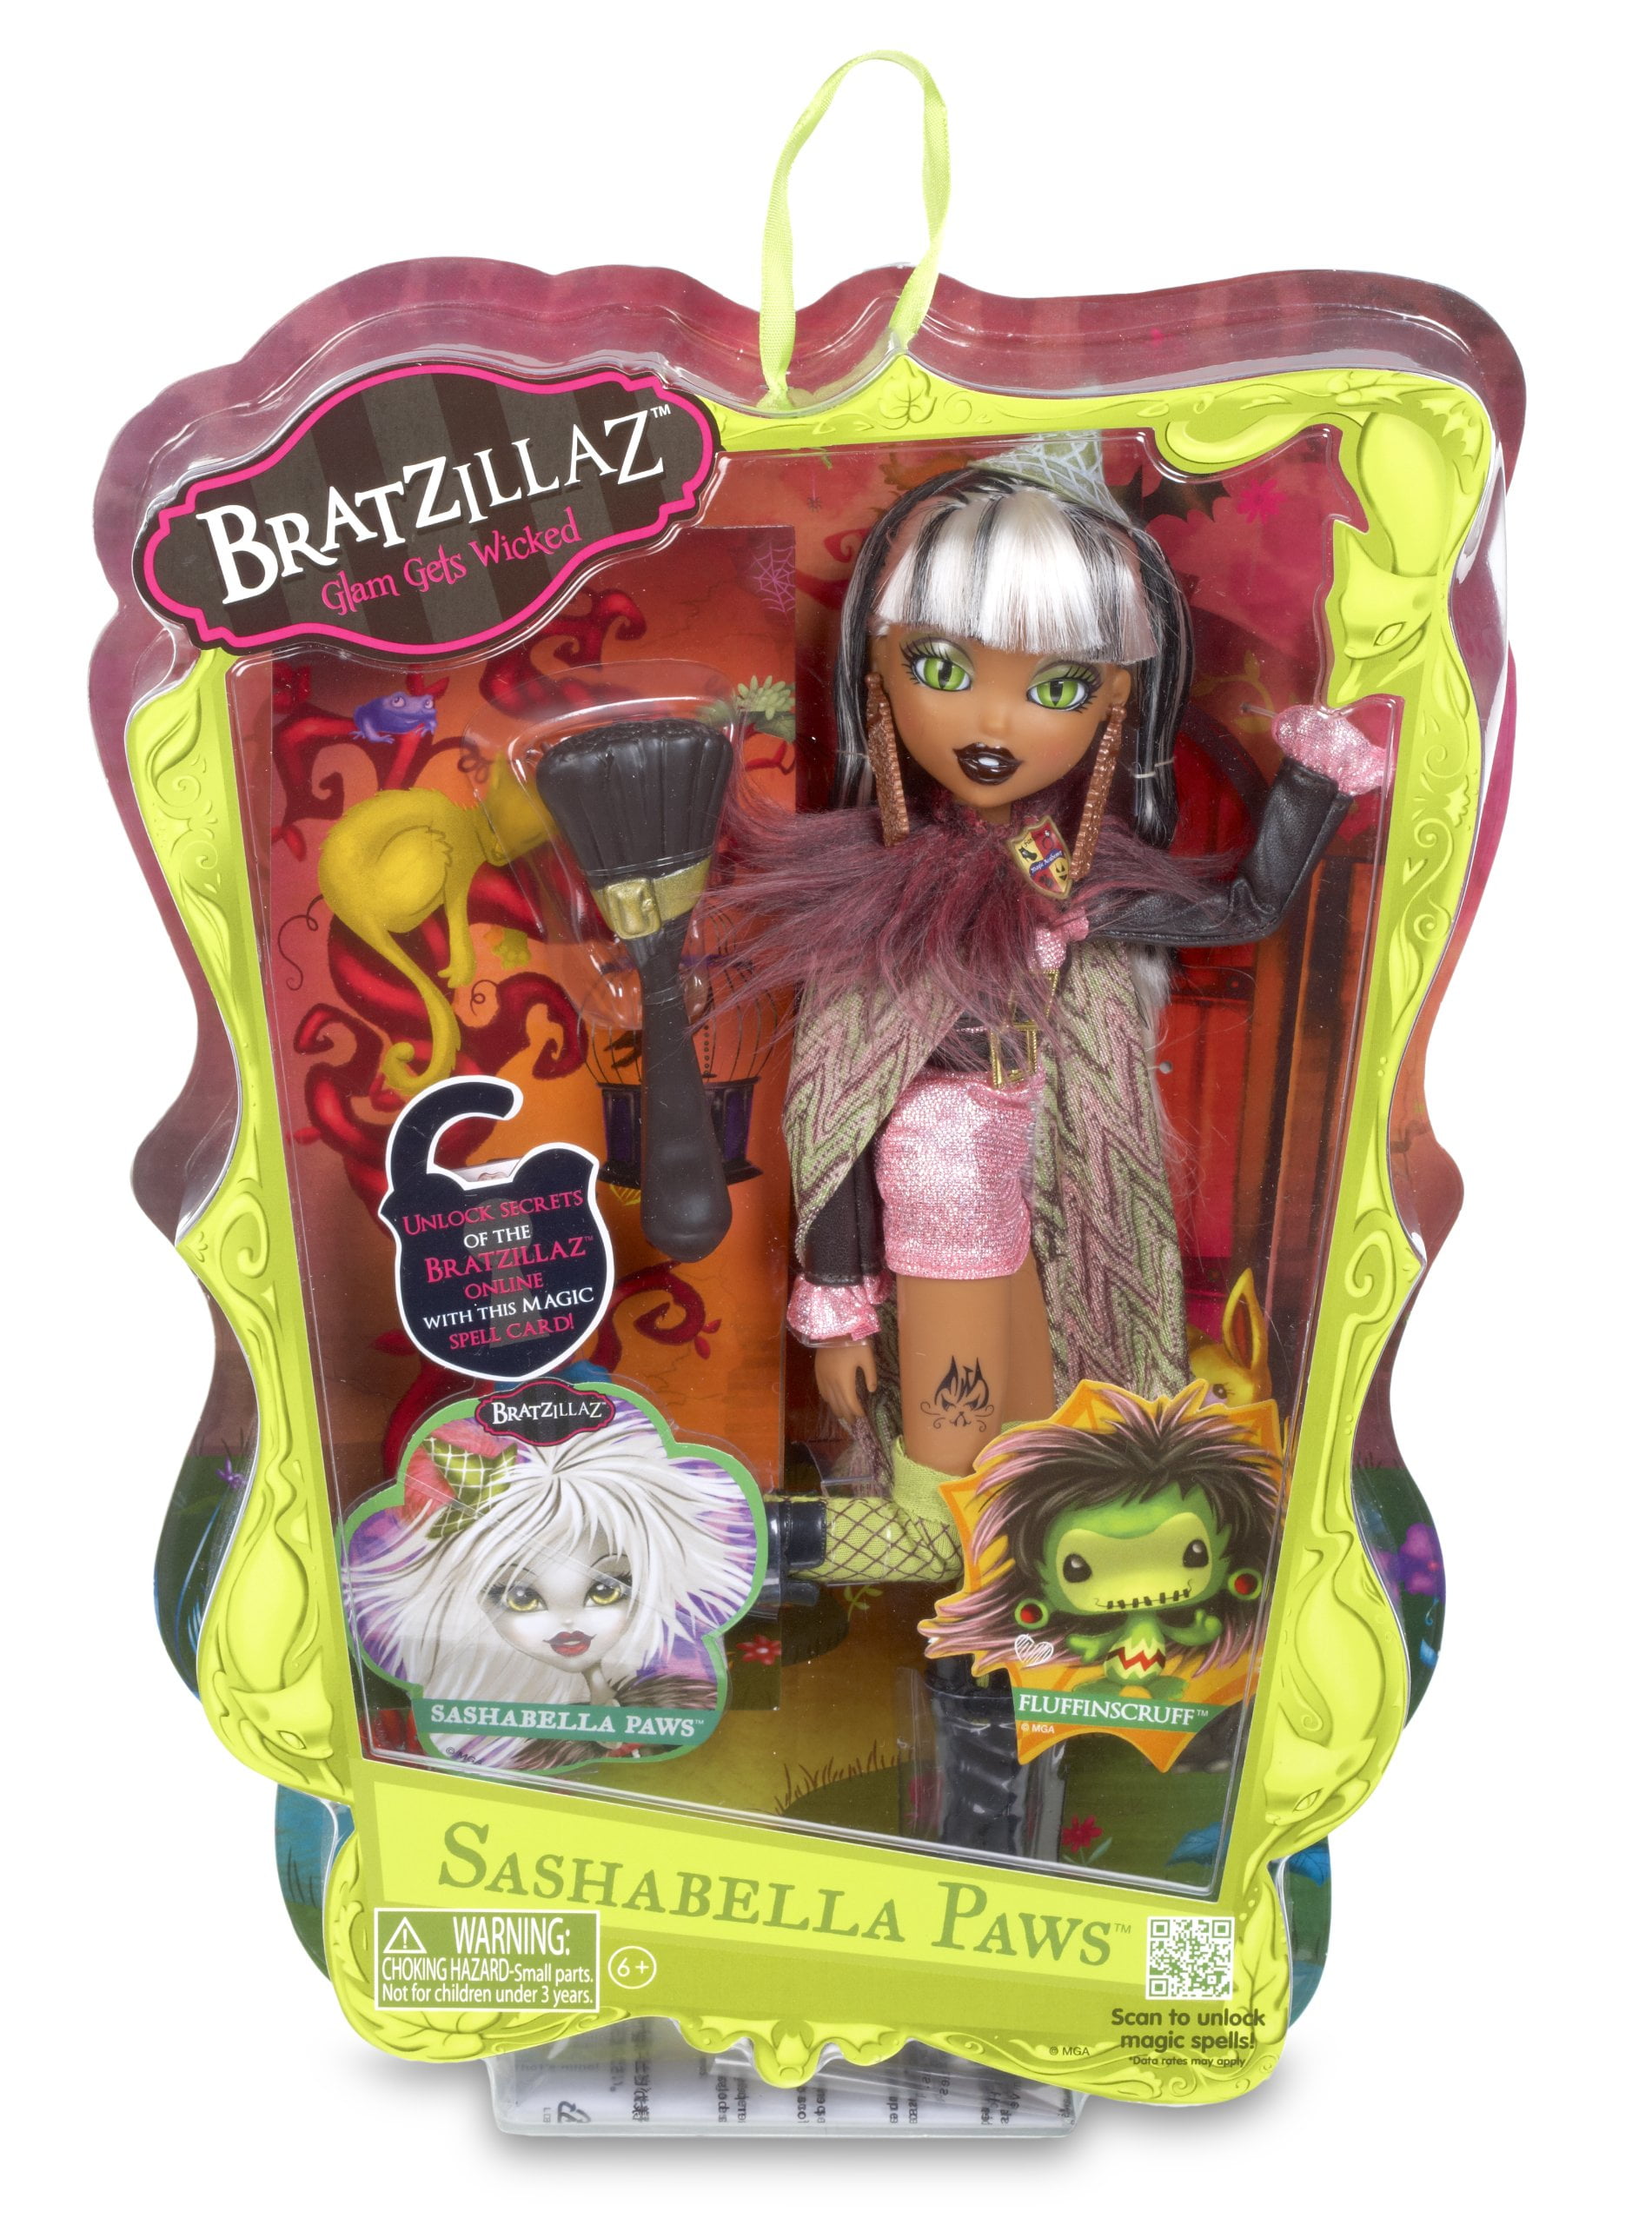 Bratz-mga Bratzillaz Doll, Sashabella Paws, Great Gift for